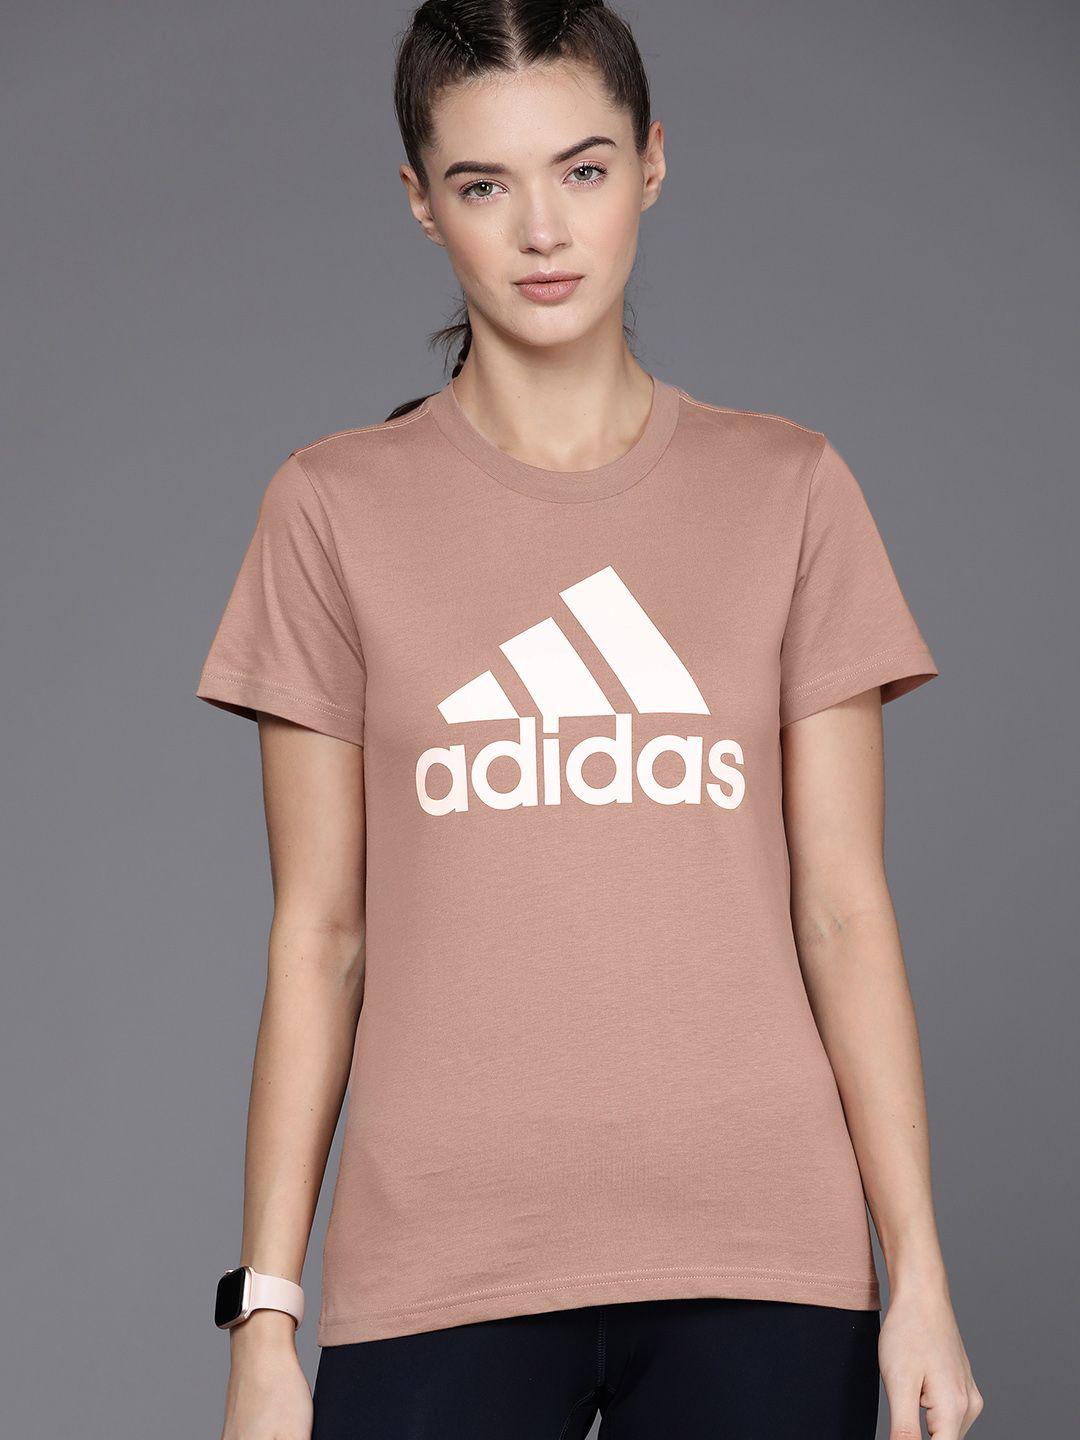 adidas brand logo print pure cotton t-shirt